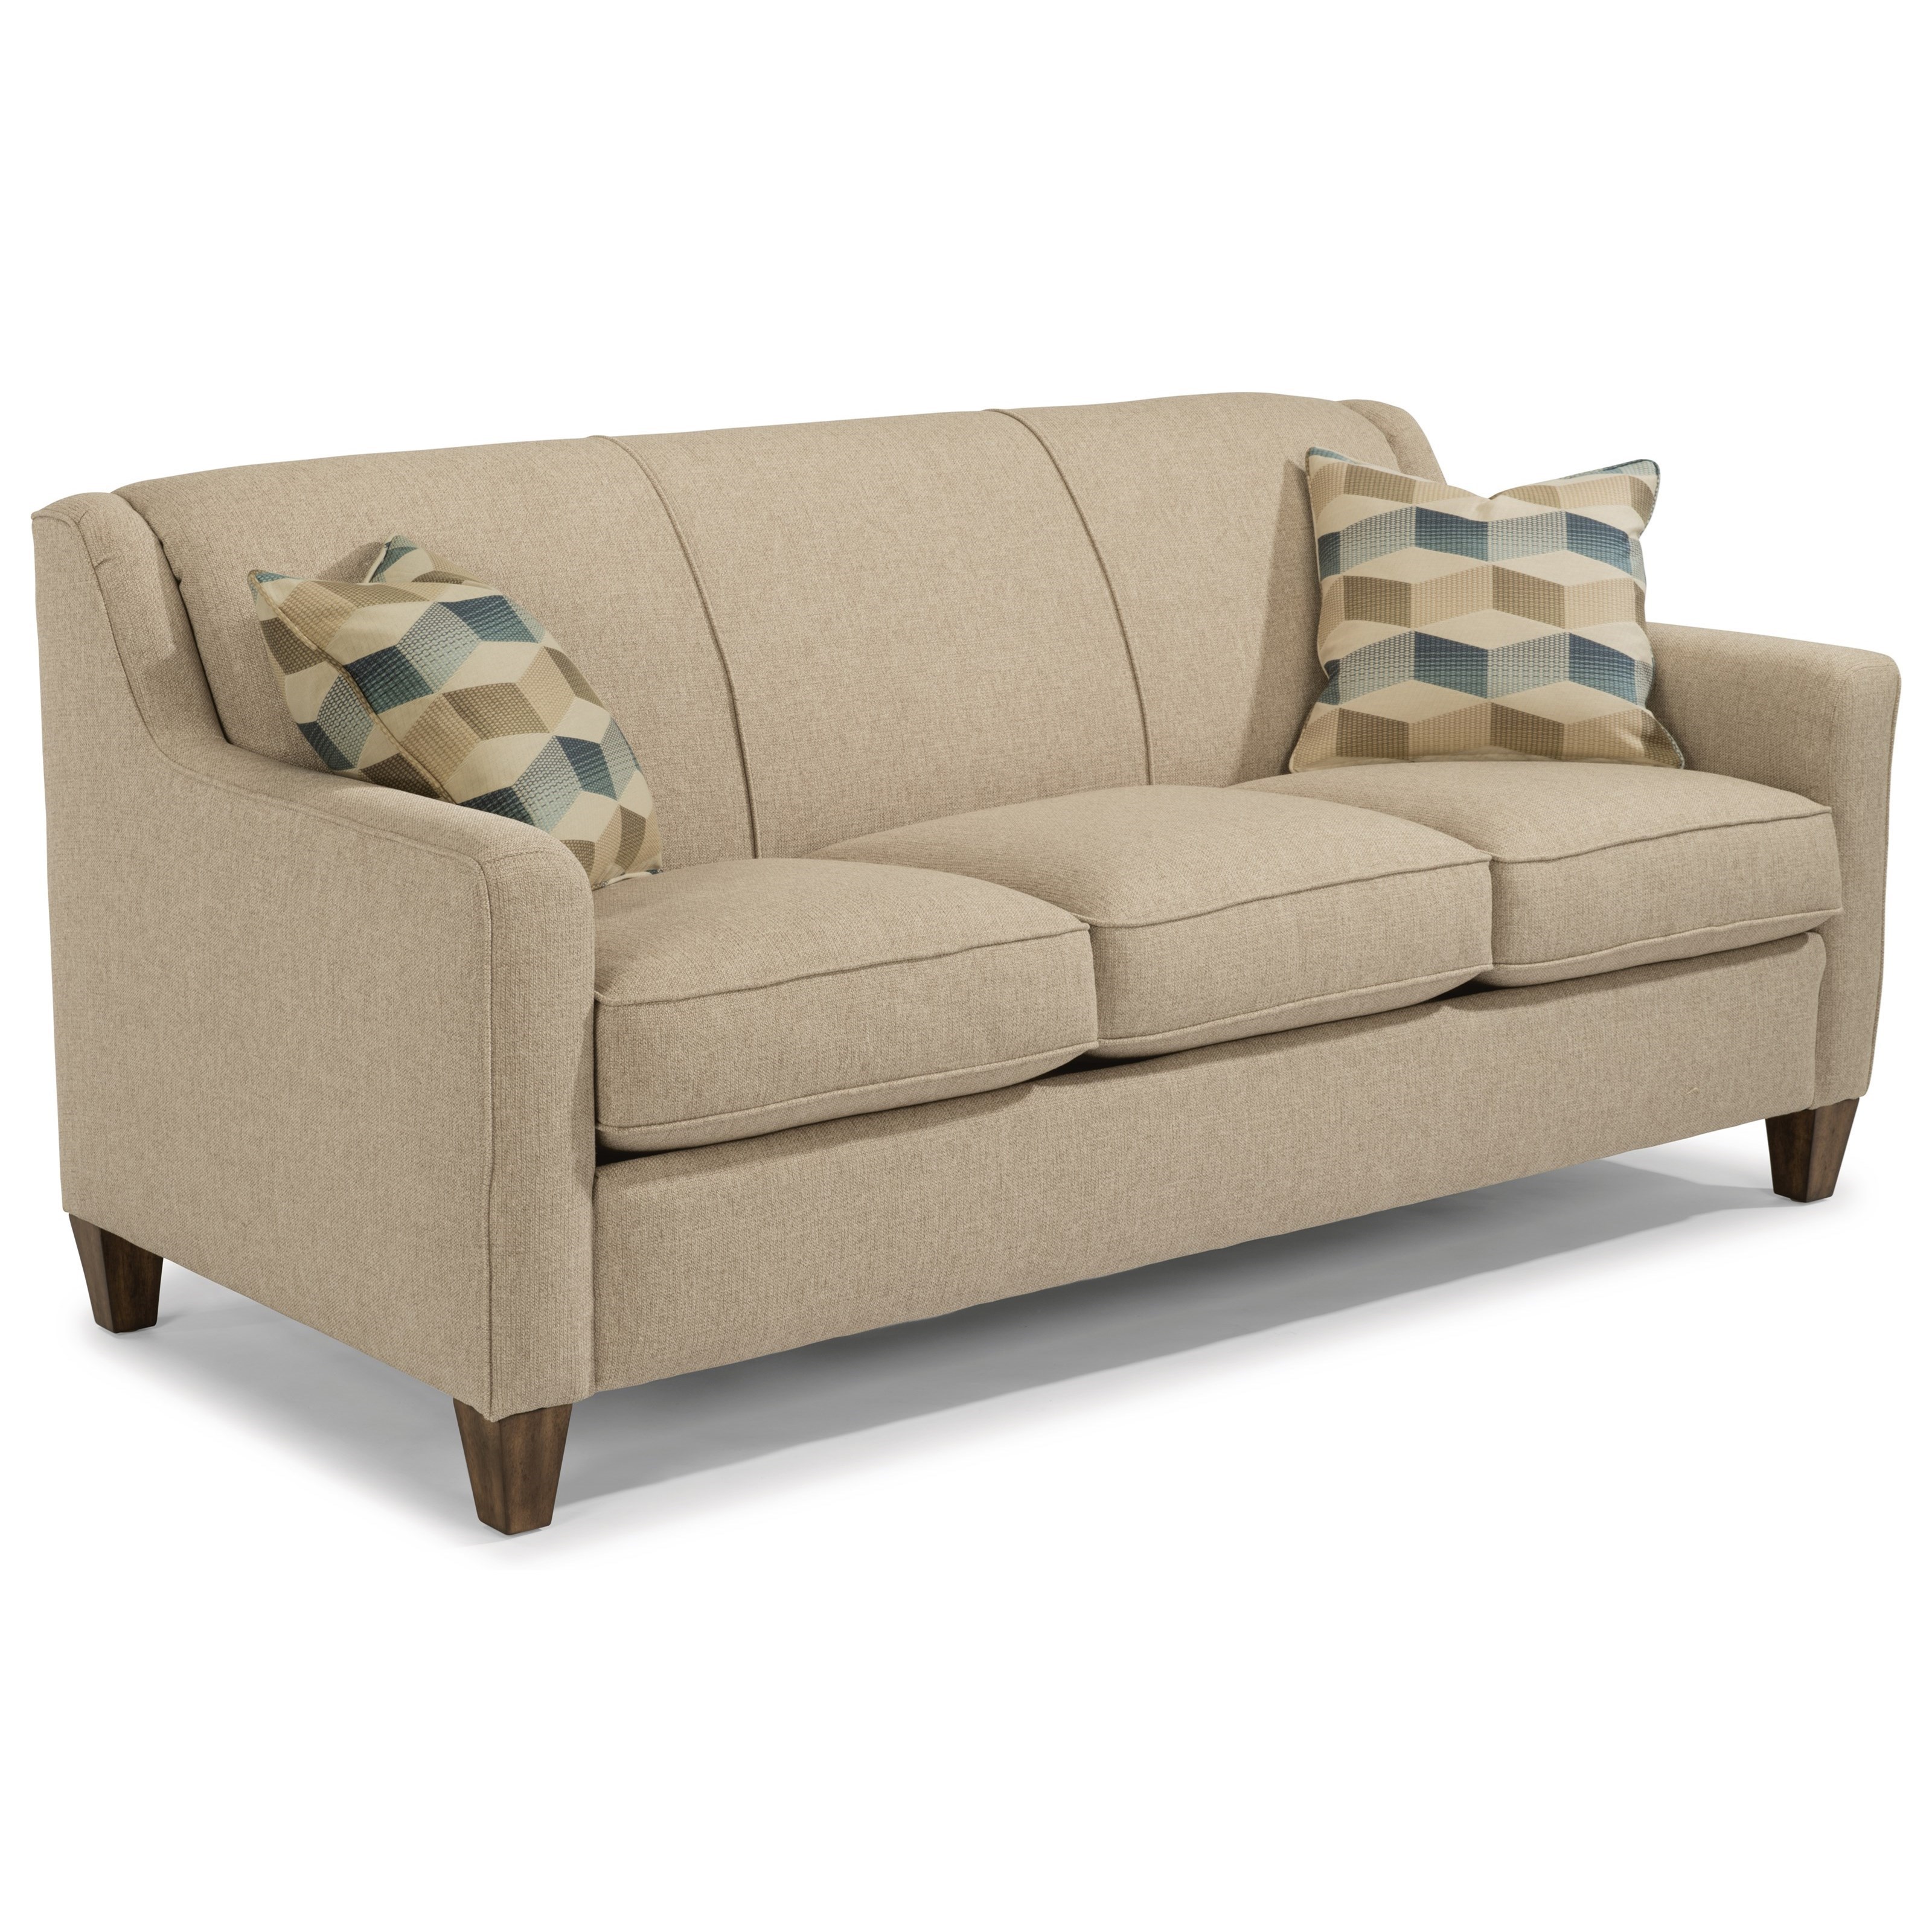 flexsteel sofas flexsteel holly contemporary sofa with angled track arms - dunk u0026 bright BNDRWWZ